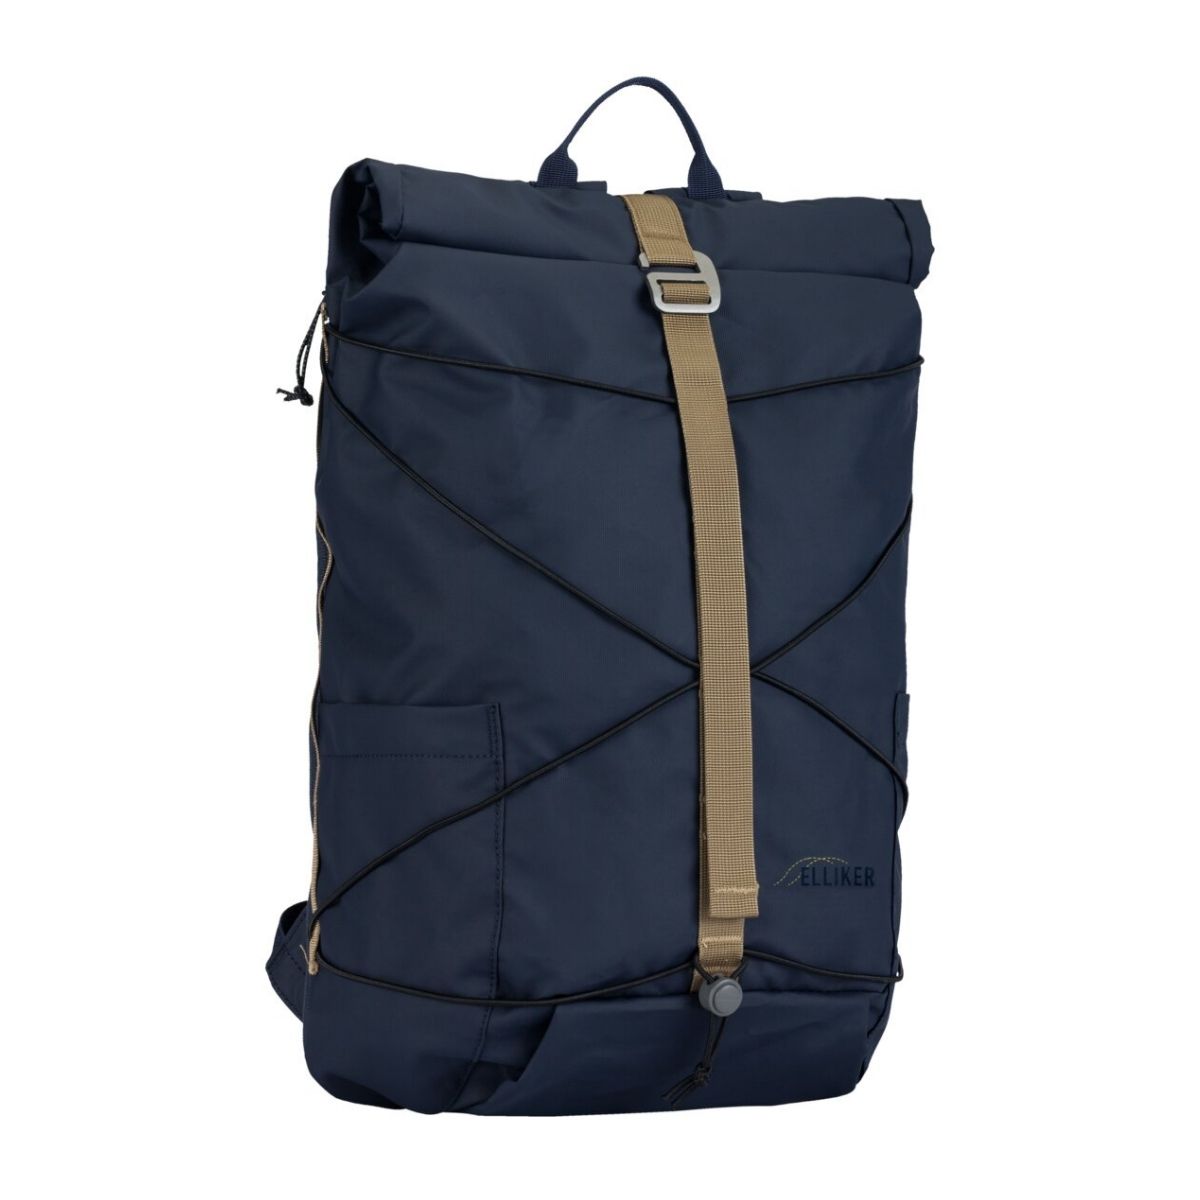 Dayle Roll Top Backpack 21/25L Navy - Rucksack